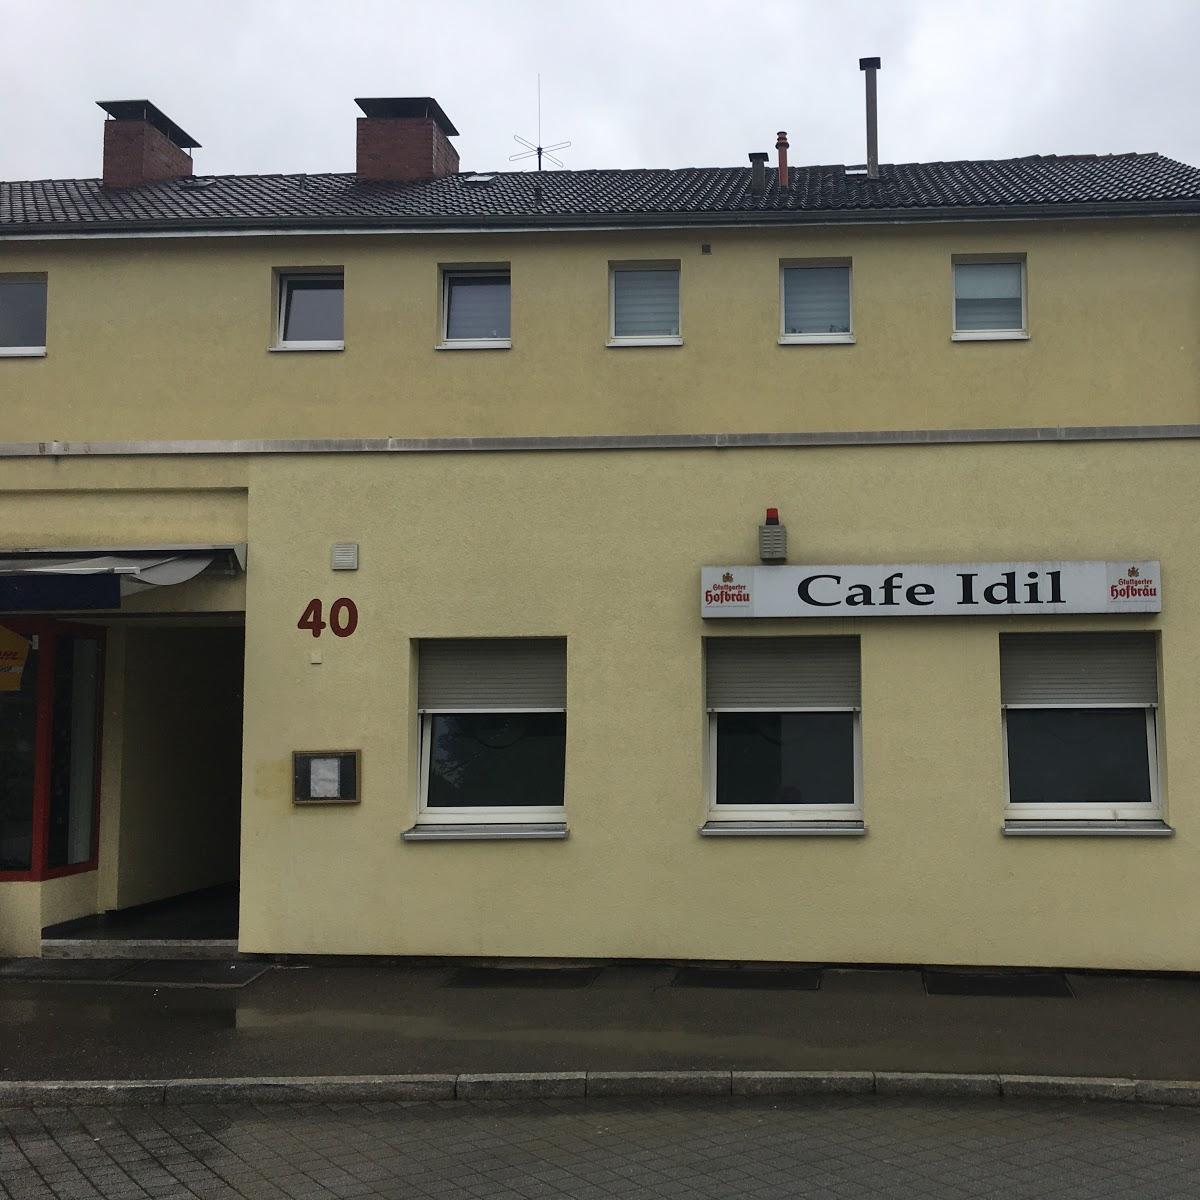 Restaurant "Cafe Idil" in Ditzingen